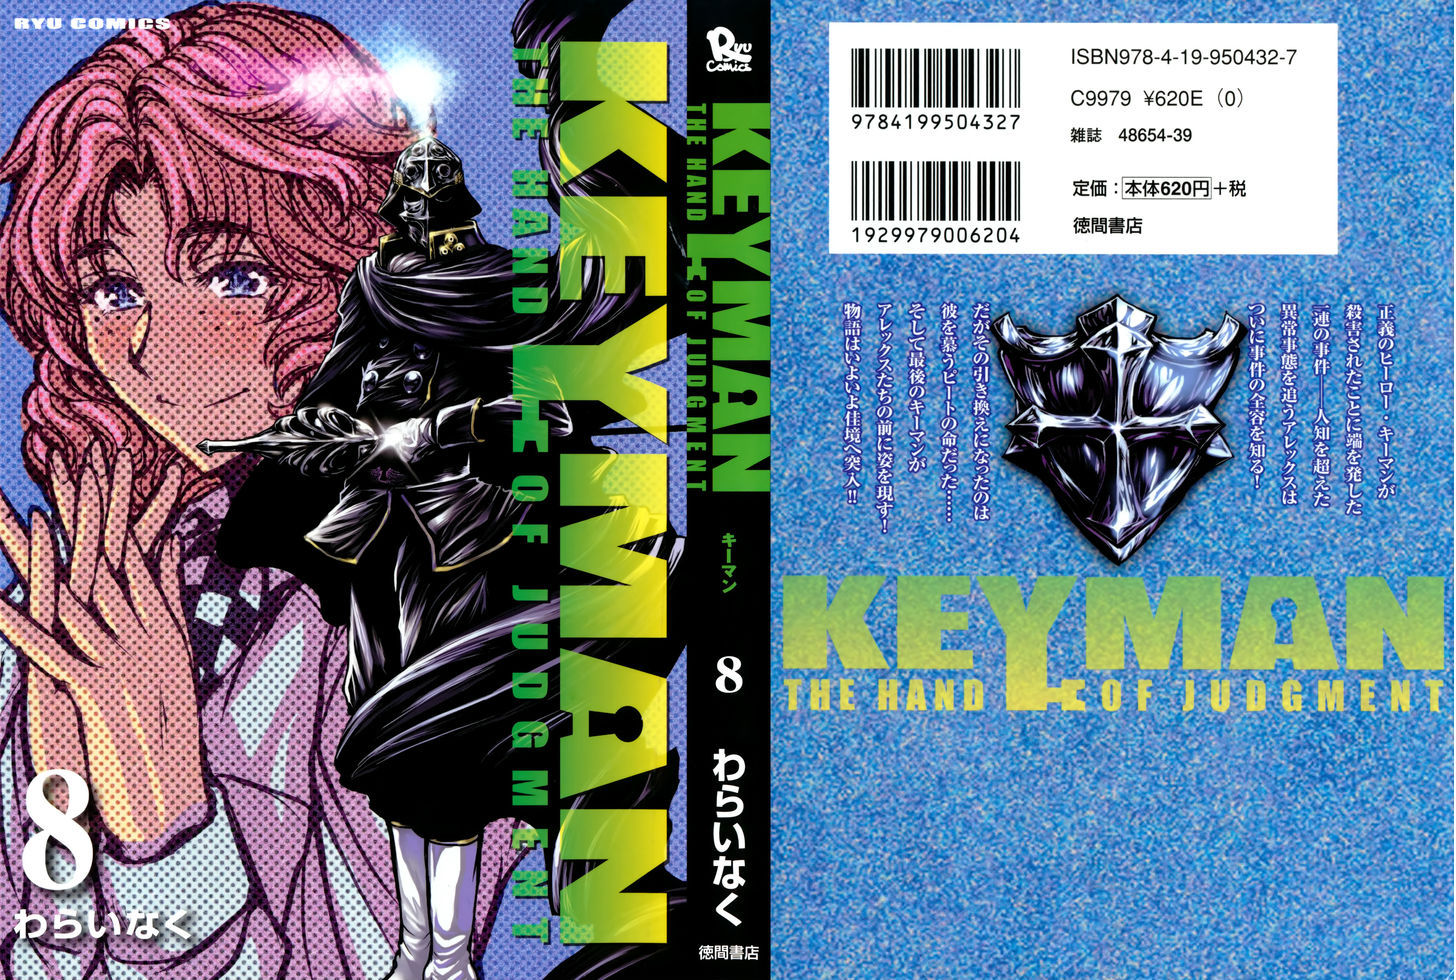 Keyman - The Hand of Judgement 35